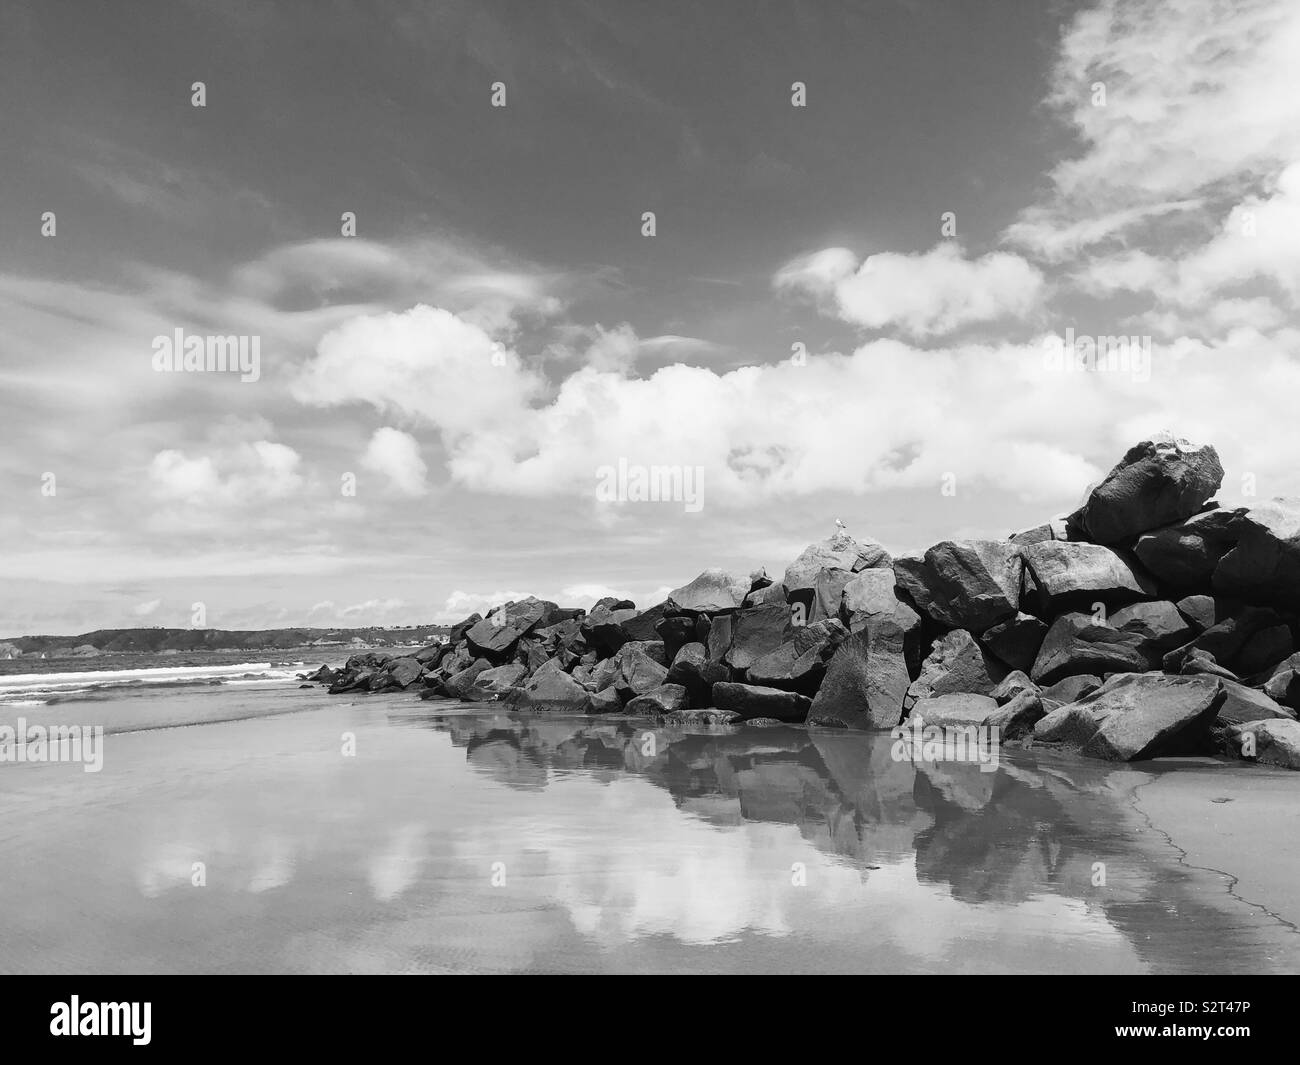 Coronado Beach in Black and White. VSCO B1 Stock Photo